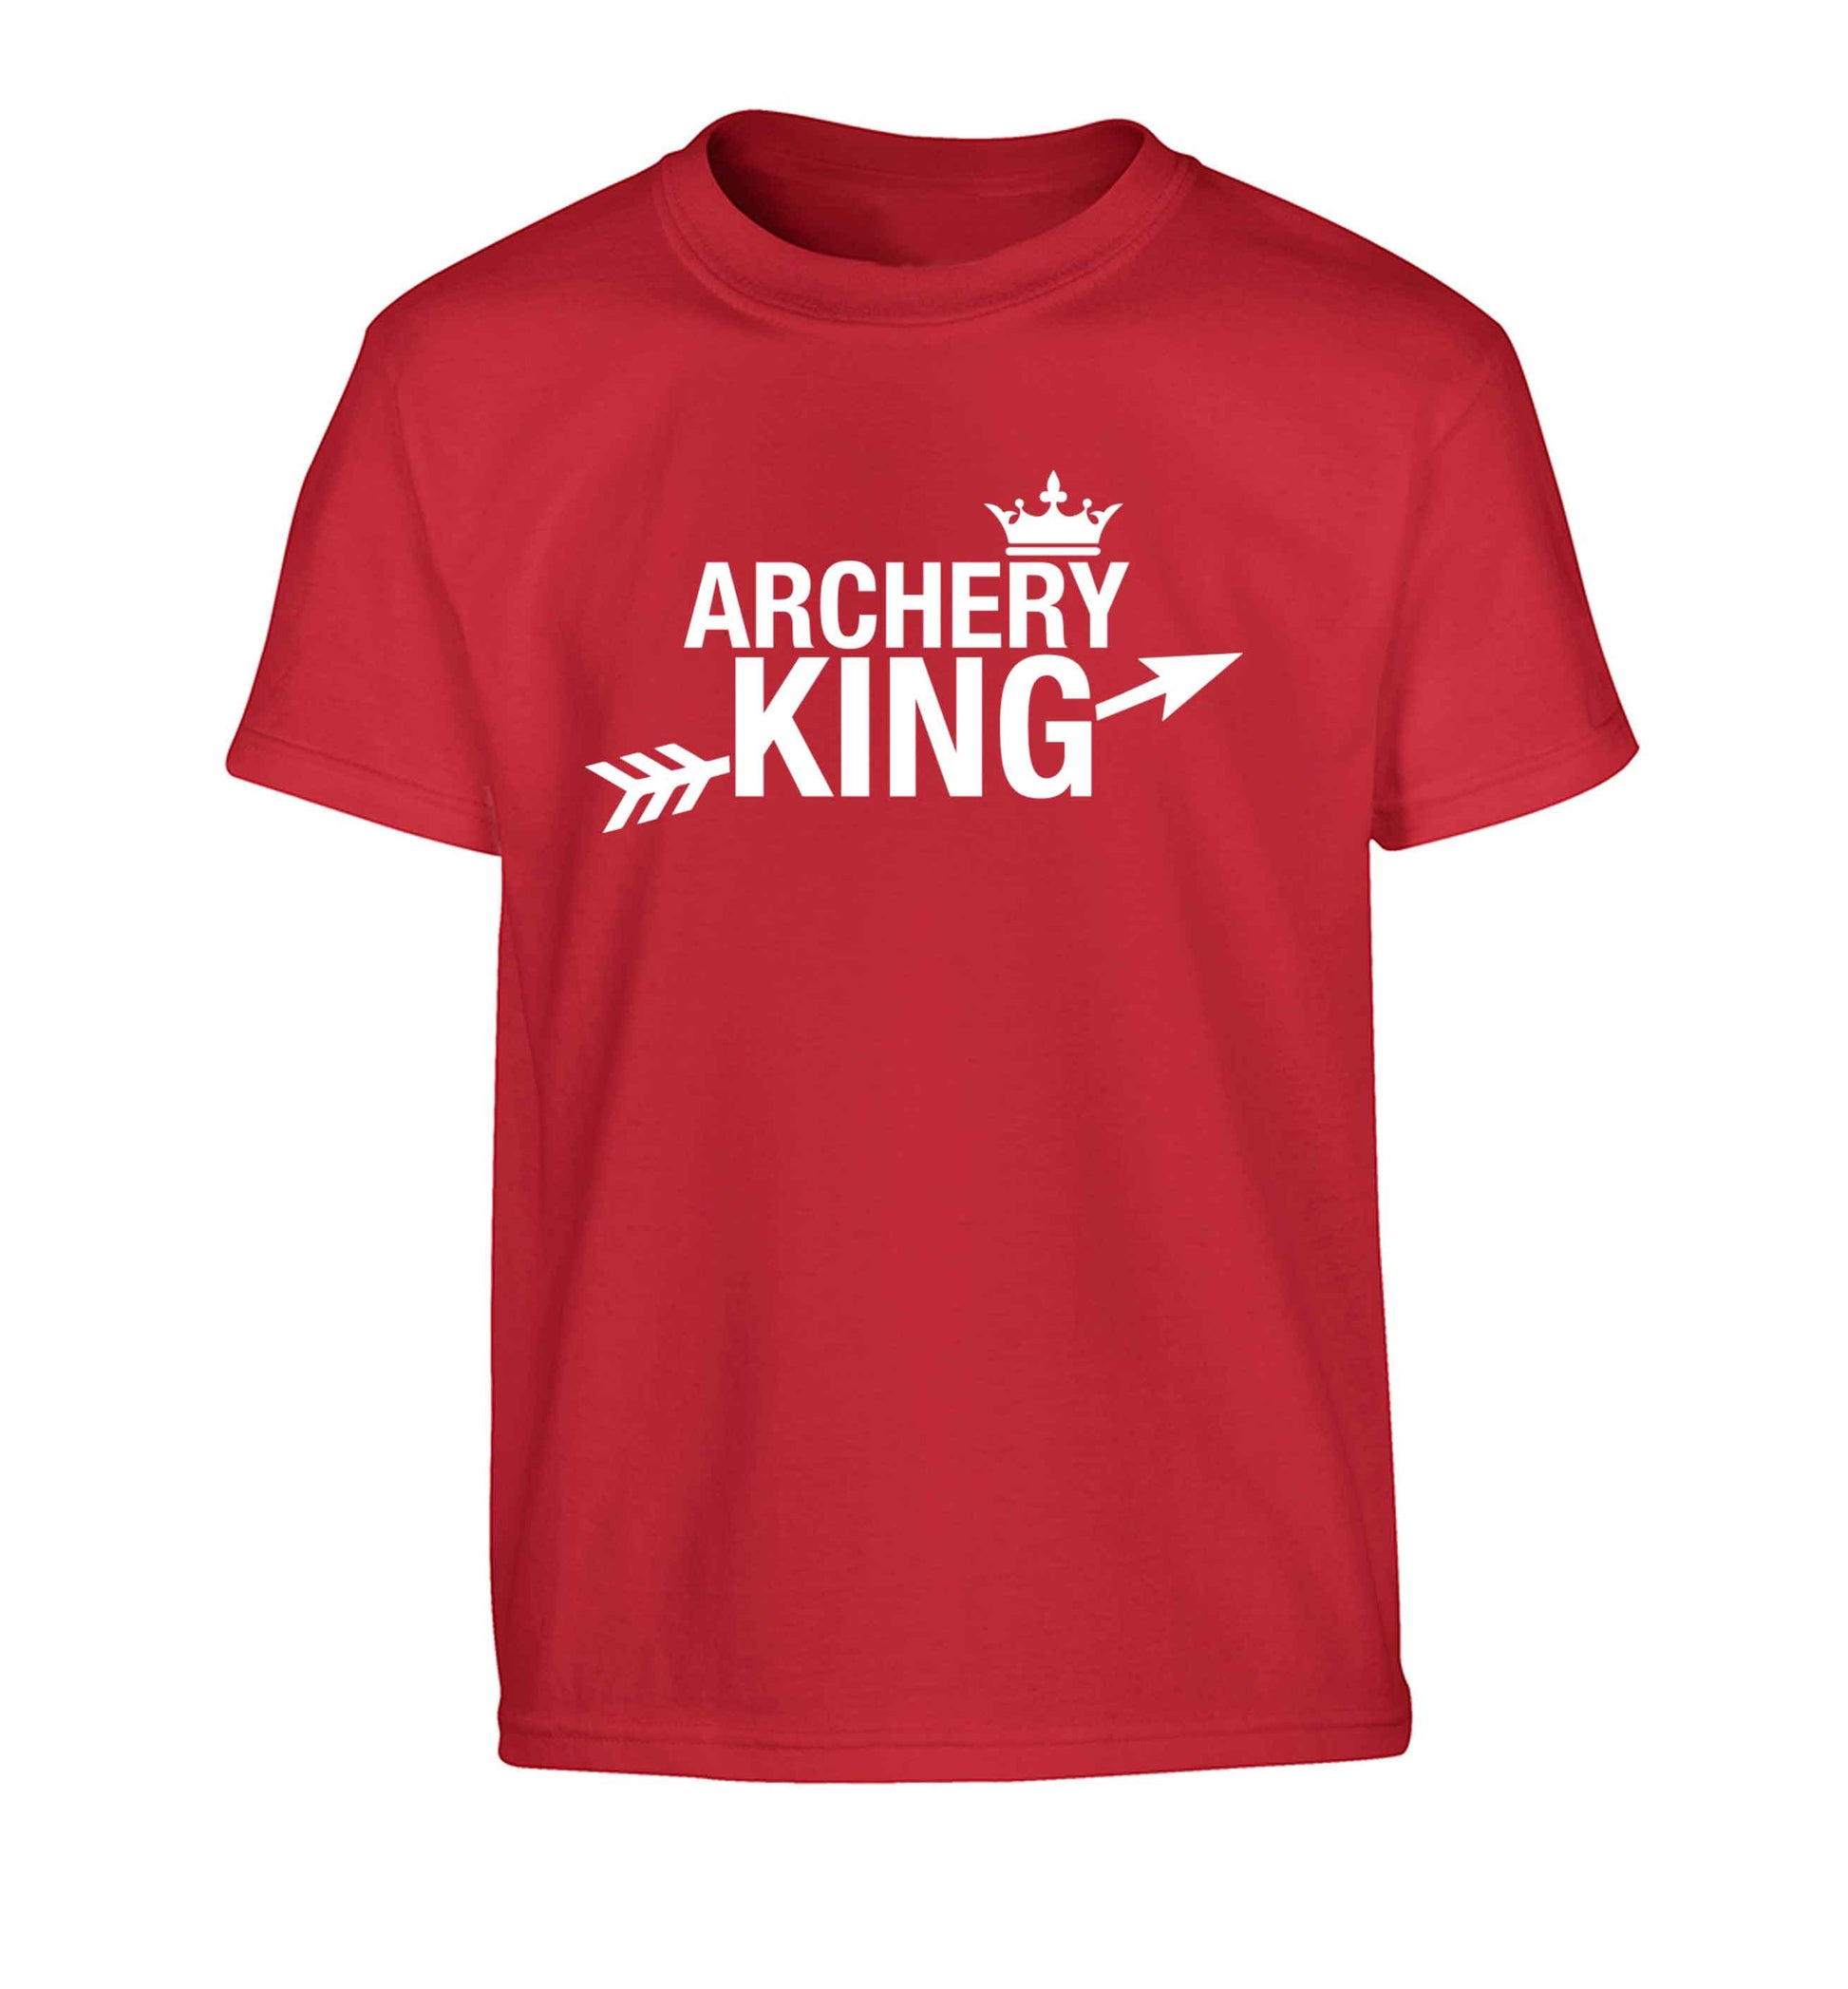 Archery king Children's red Tshirt 12-13 Years